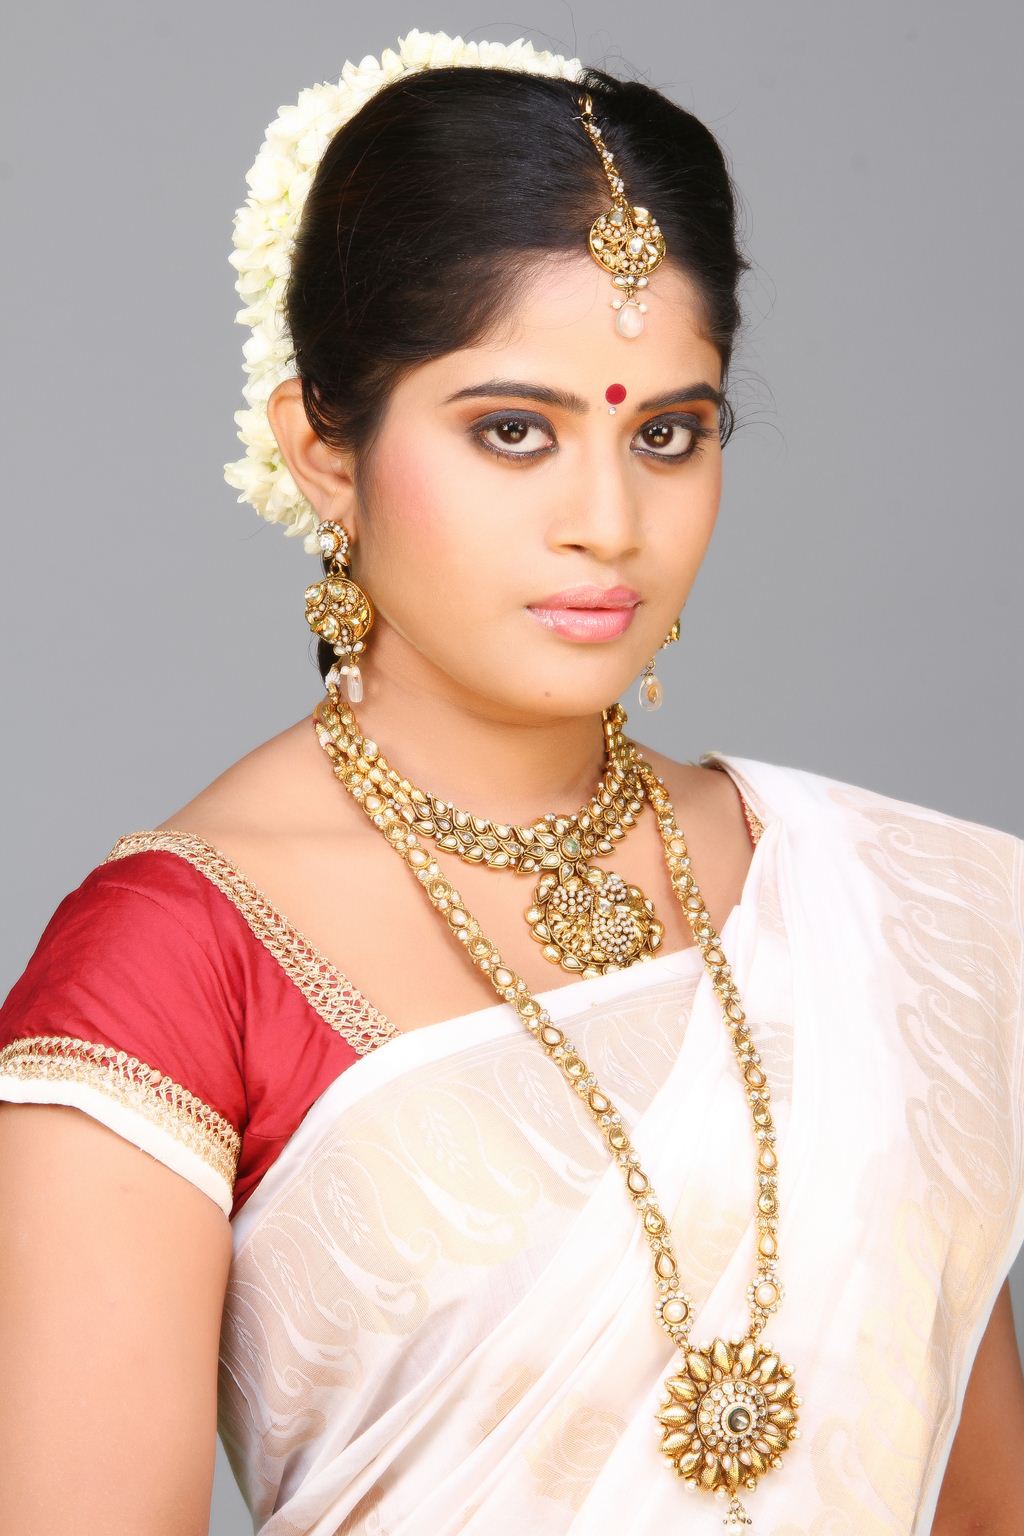 Actresses Rithika Traditional Saree Jewelry wears hot portfolio photo ...